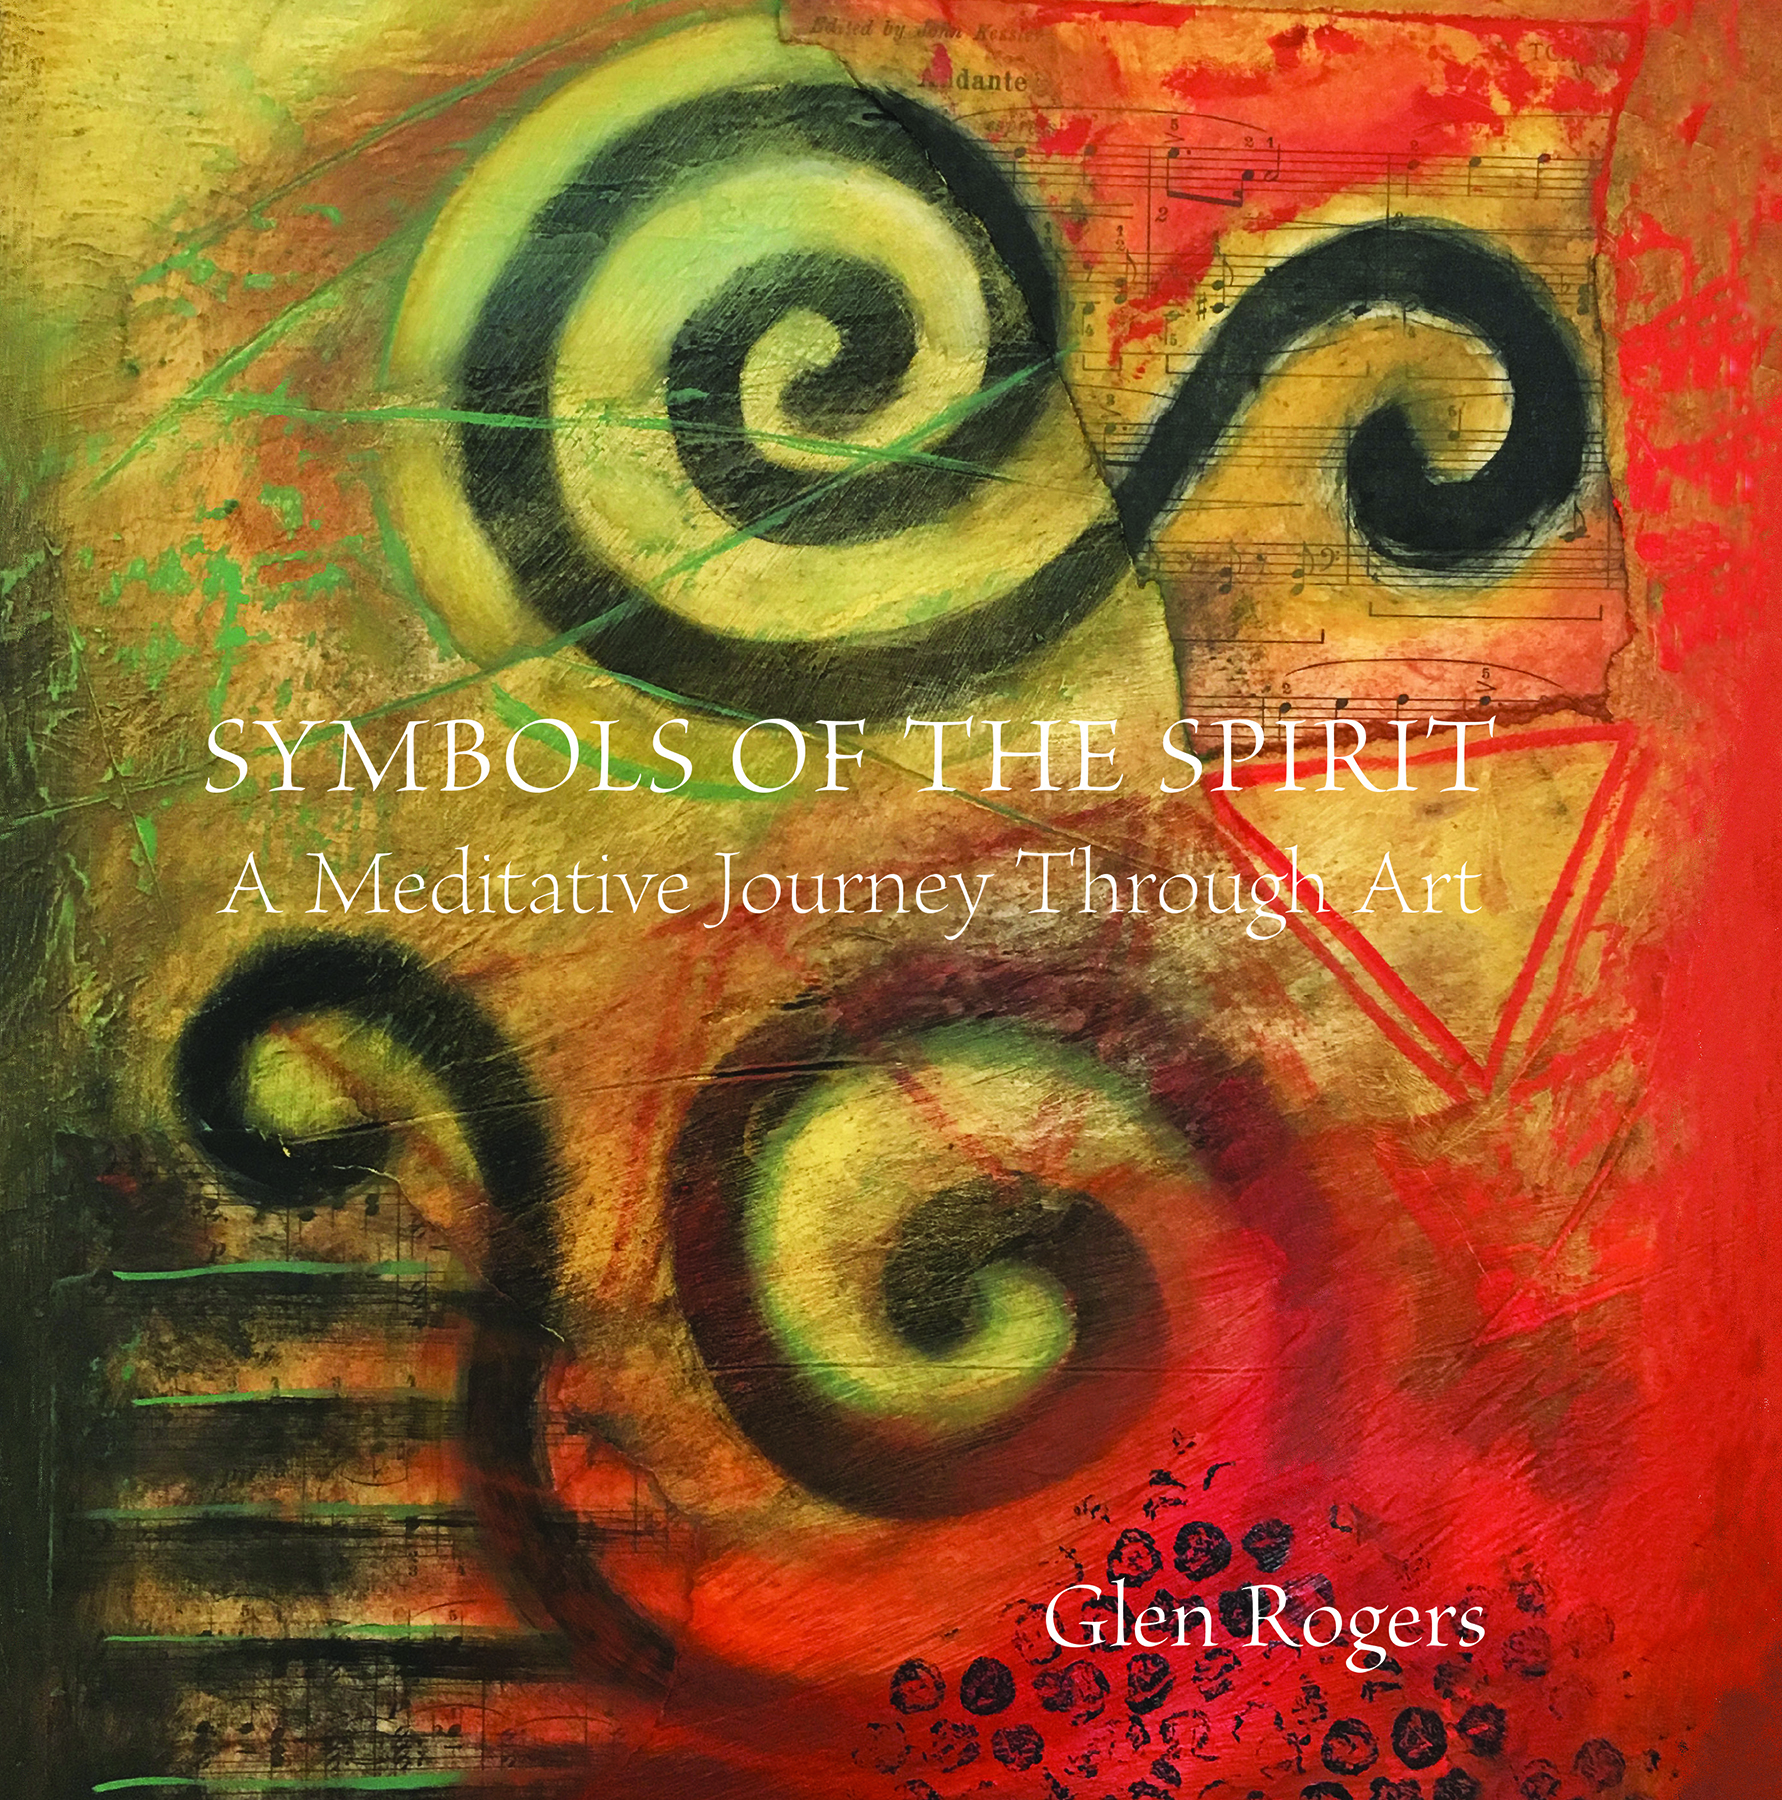 Symbols of the Spirit by Glen Rogers